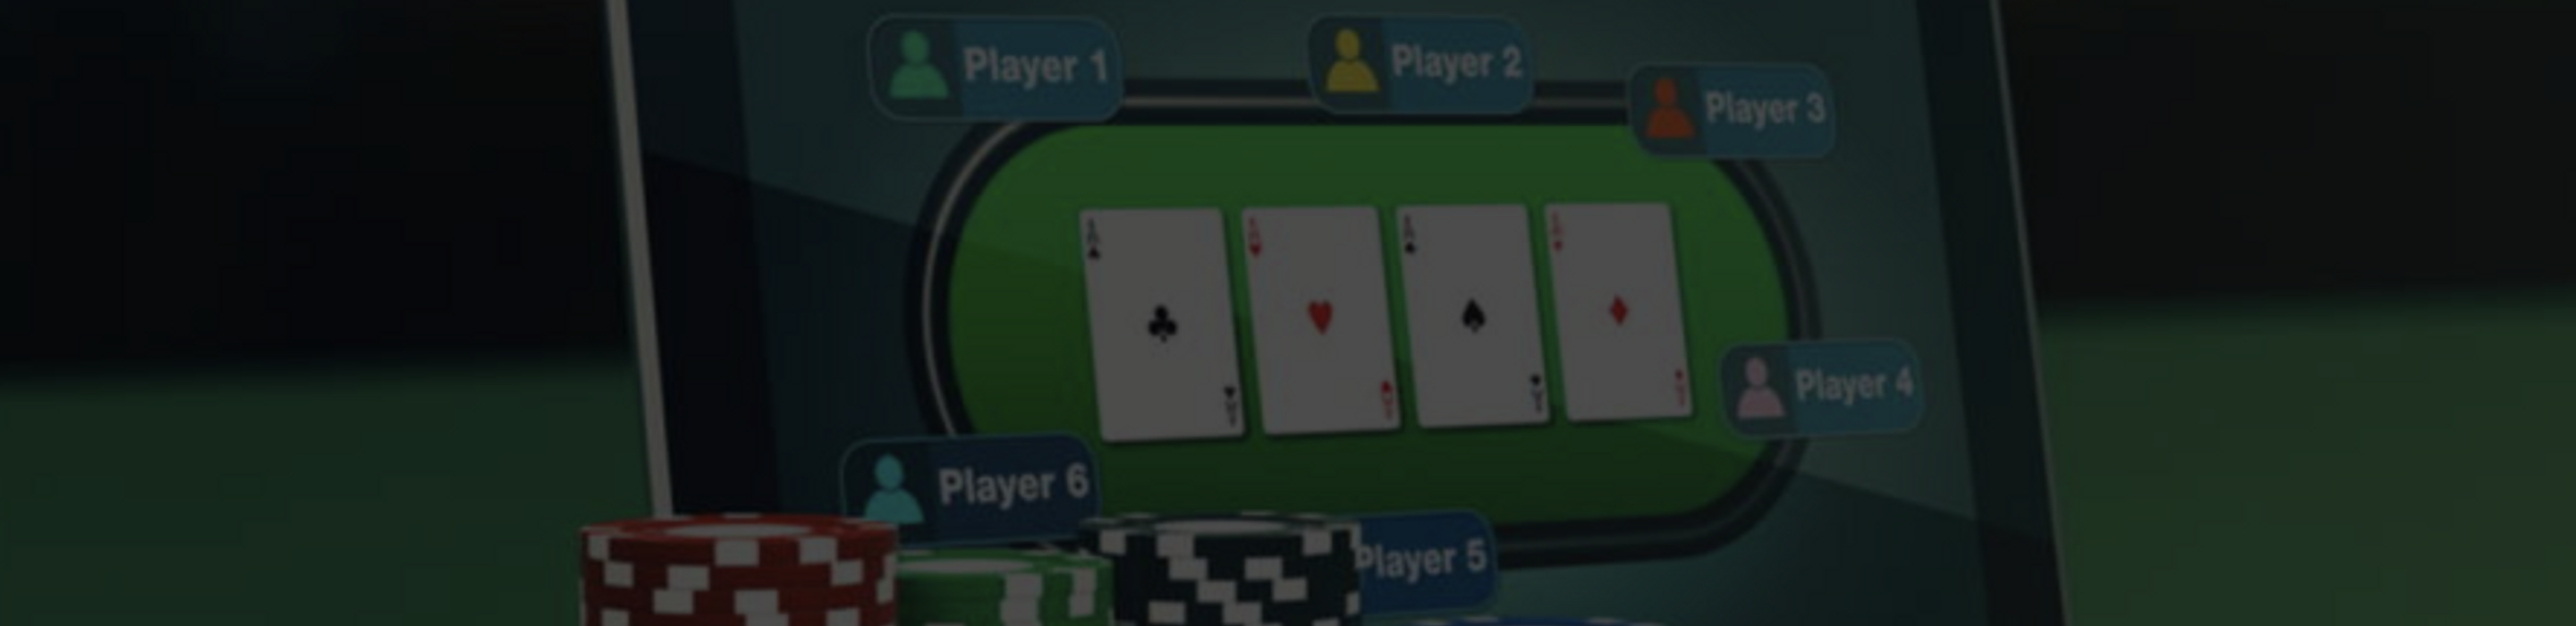 Poker Casino Review Banner